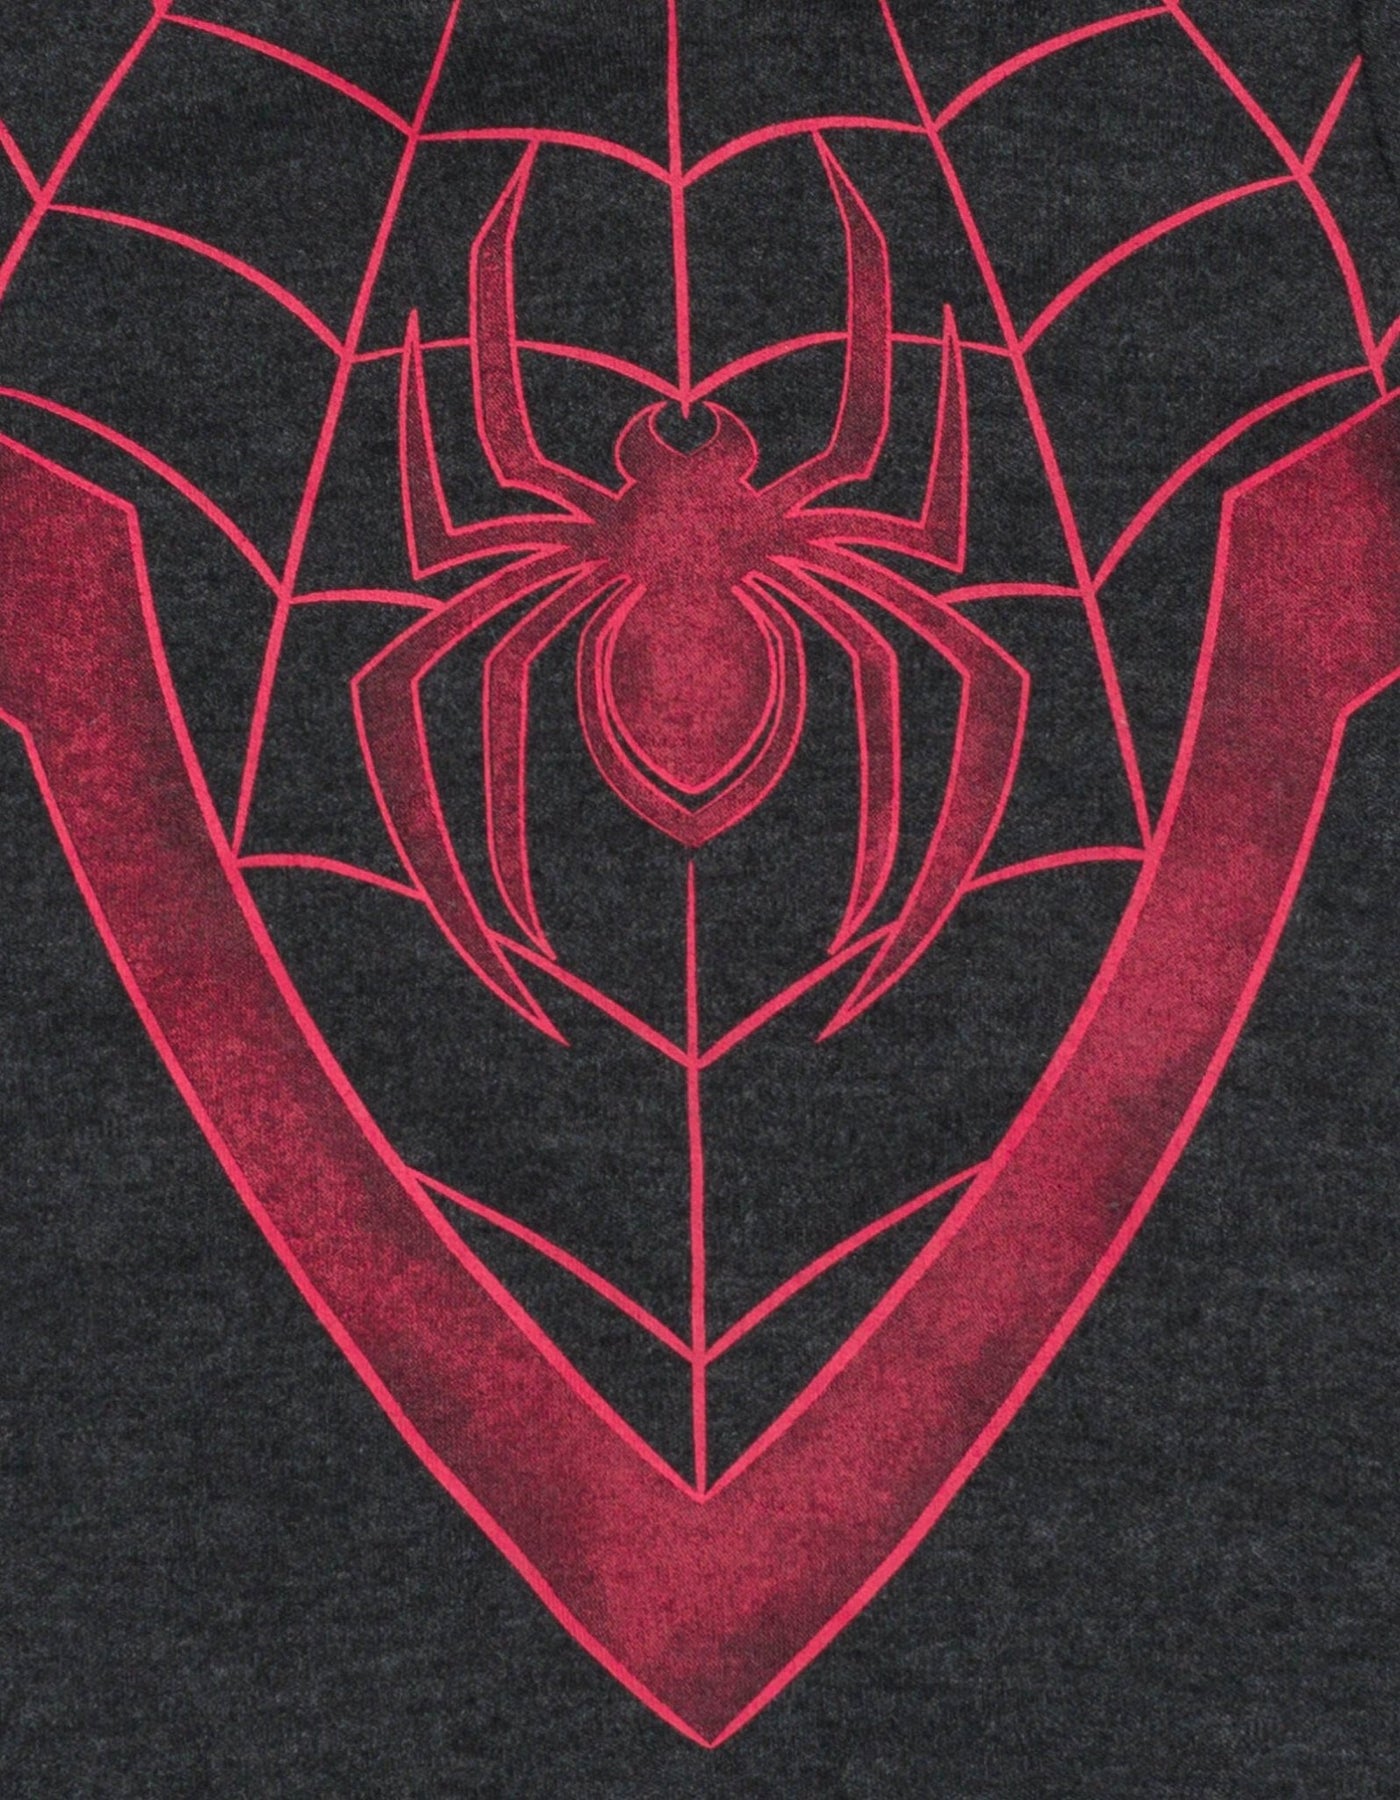 Marvel Spider - Man Miles Morales Cosplay Romper - imagikids